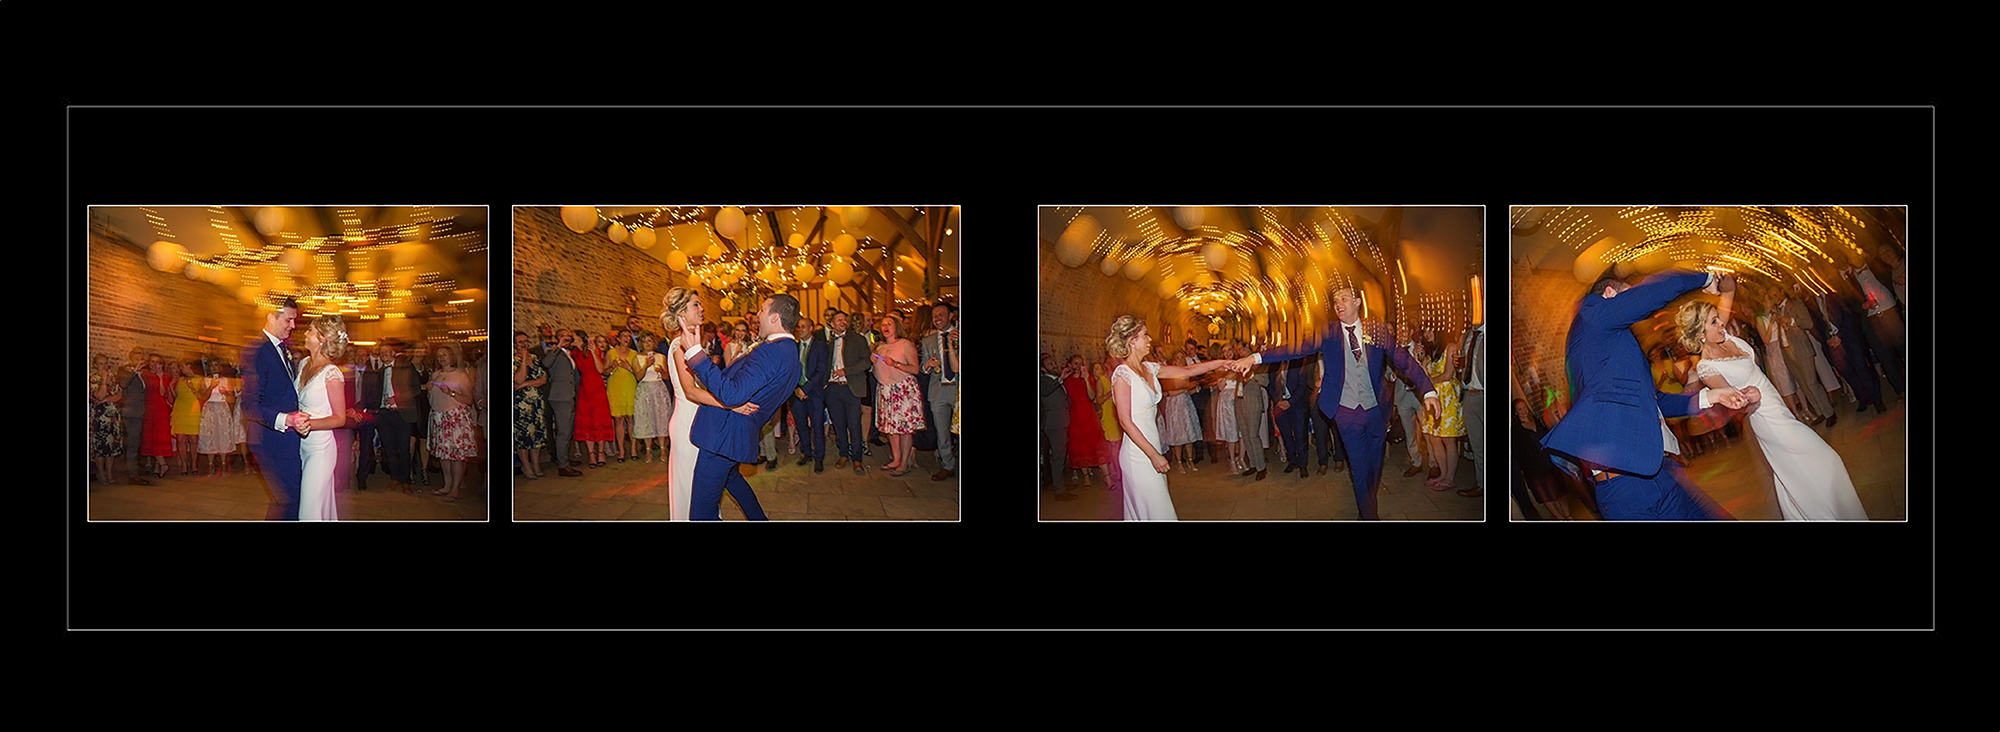 KHP_wedding-album-dancing.jpg#asset:2839